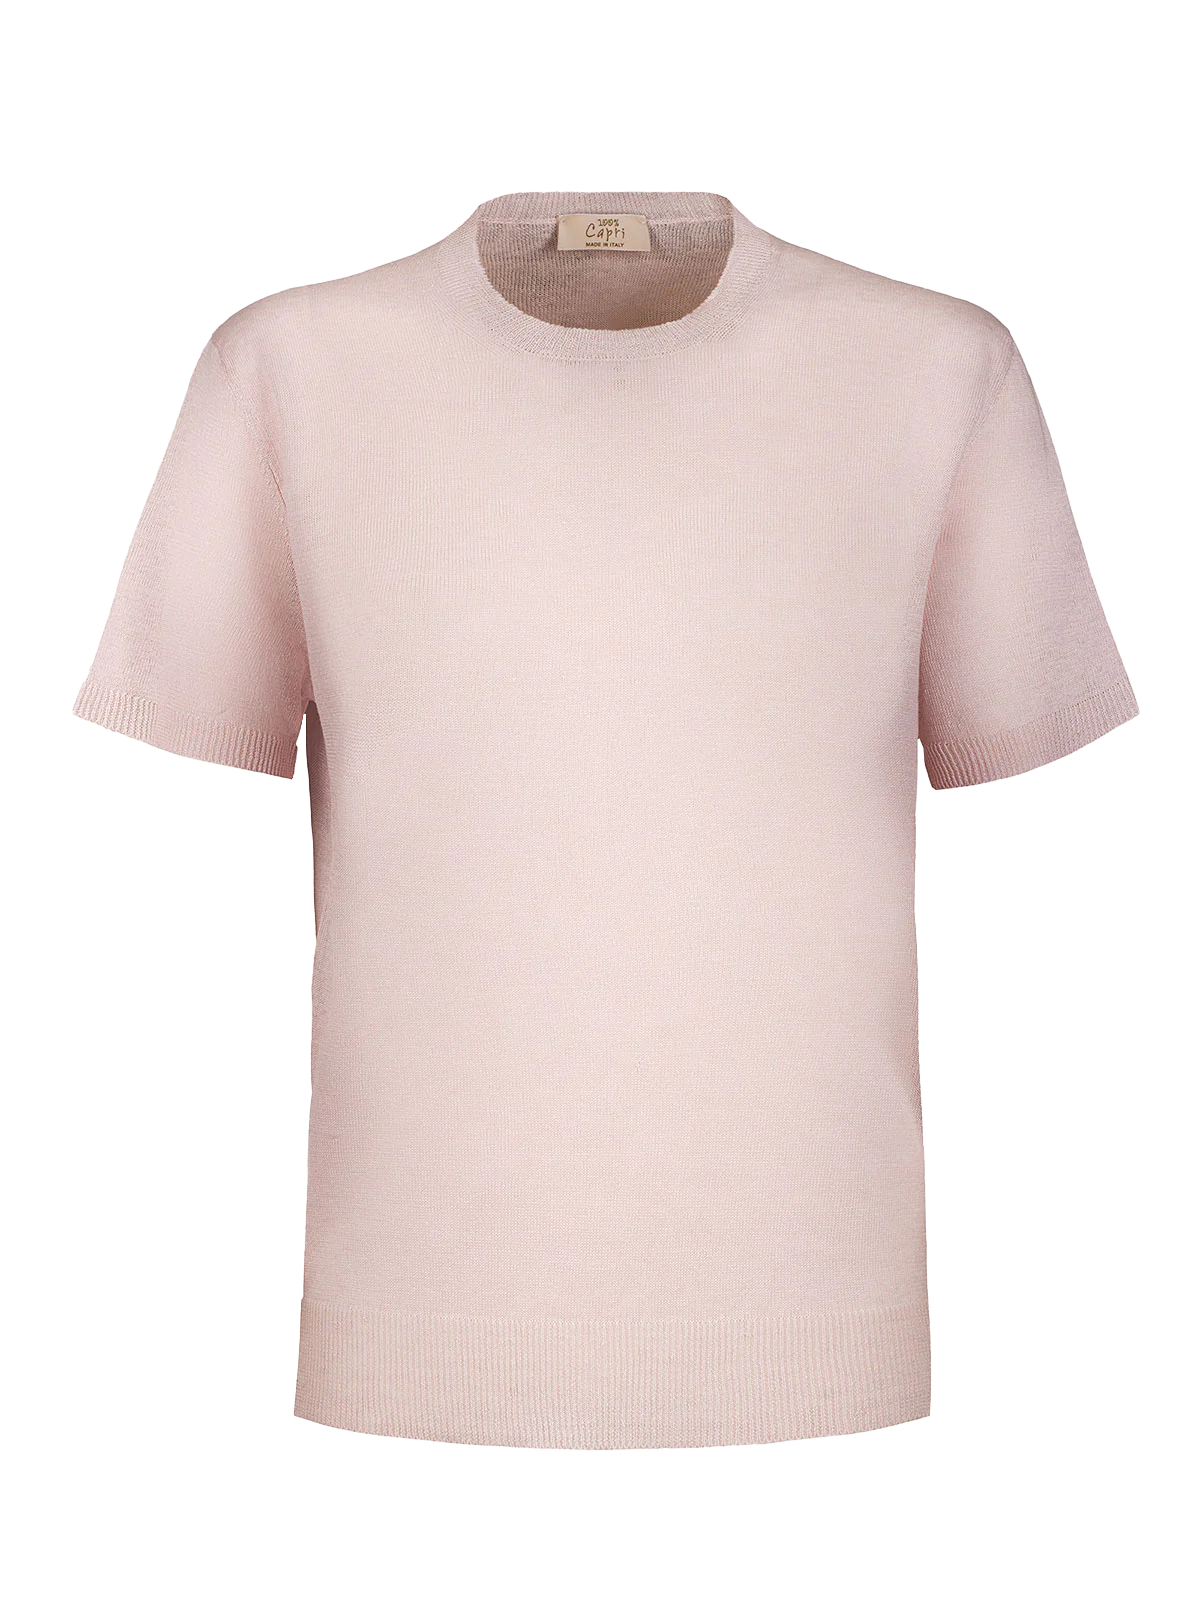 T-Shirt M/C 100% Capri pink linen t-shirt front